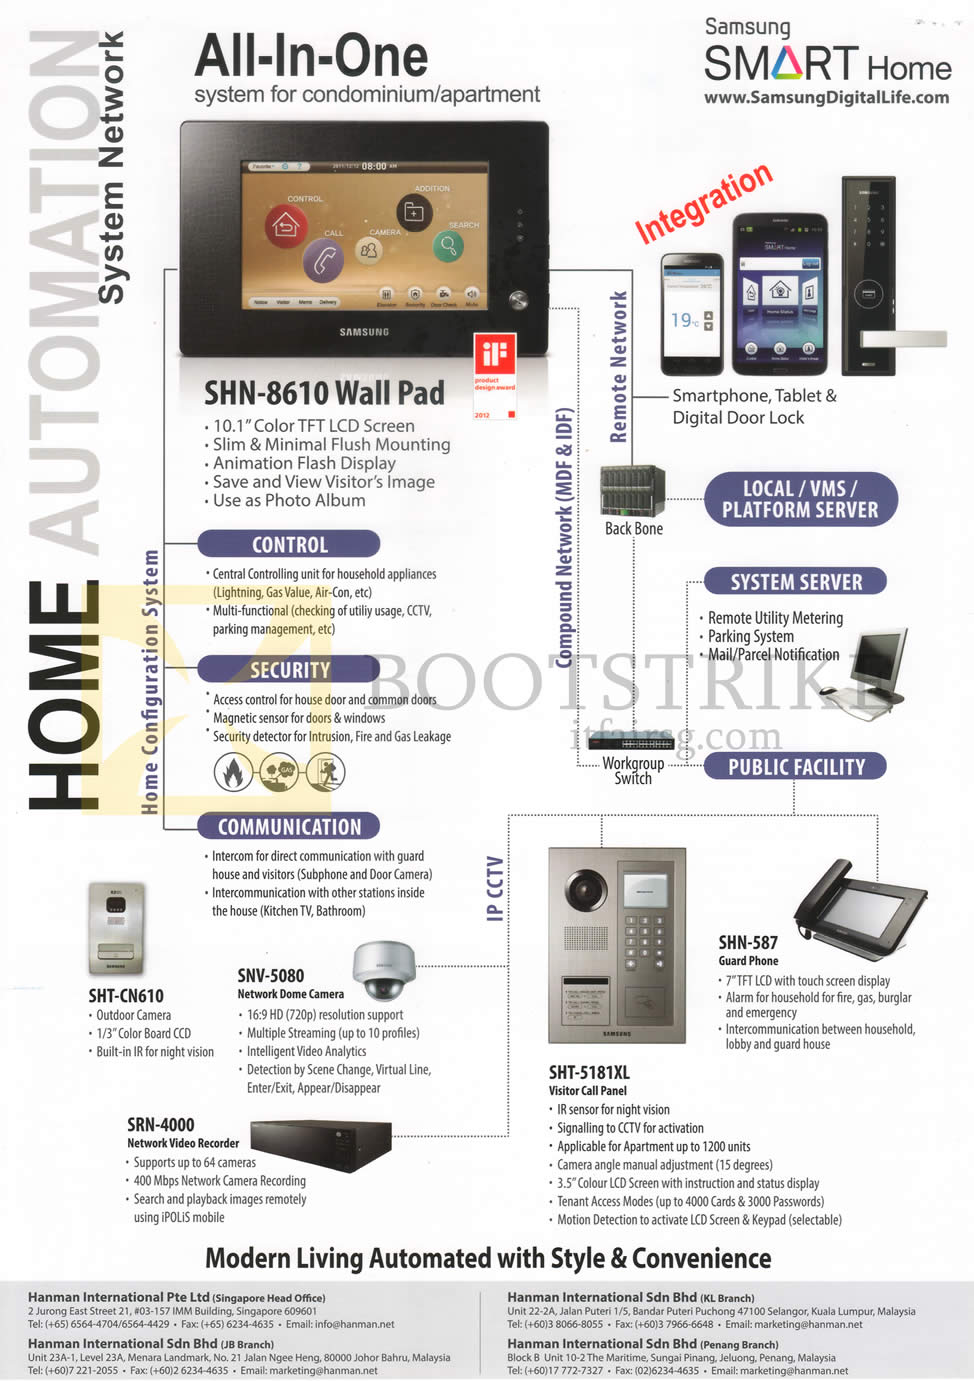 IT SHOW 2015 price list image brochure of Hanman Door Locks Wall Pad, CCTV Camera, Guard Phone, Voice Recorder, SHN-8610, 587, SHT-CN610, 5181XL, SRN-4000, SNV-5080